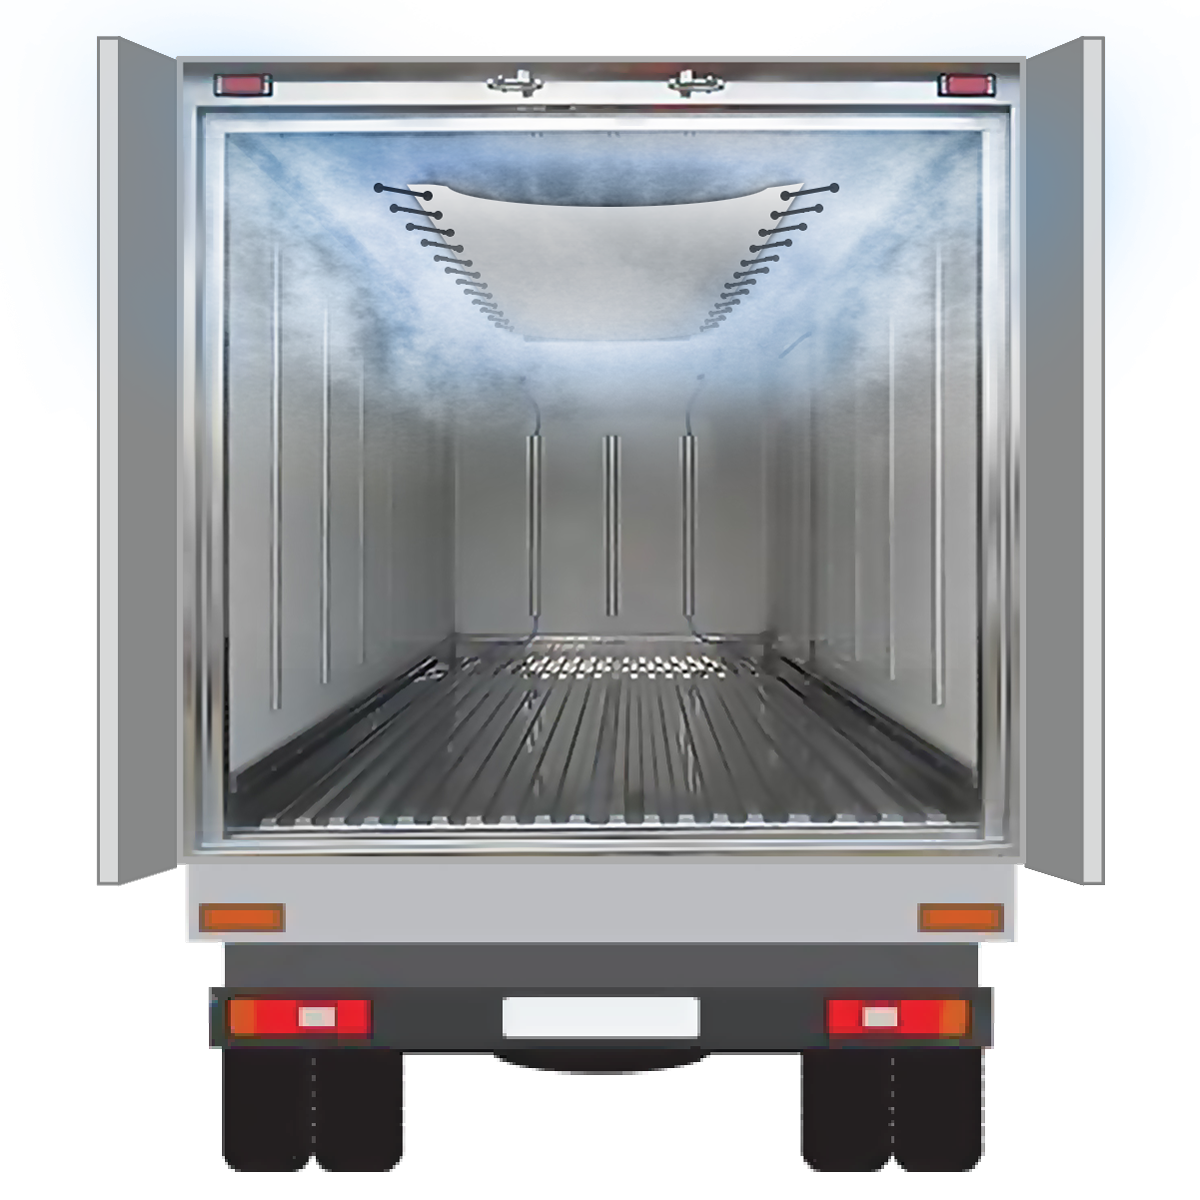 Ensure air flows distribution around the whole van space